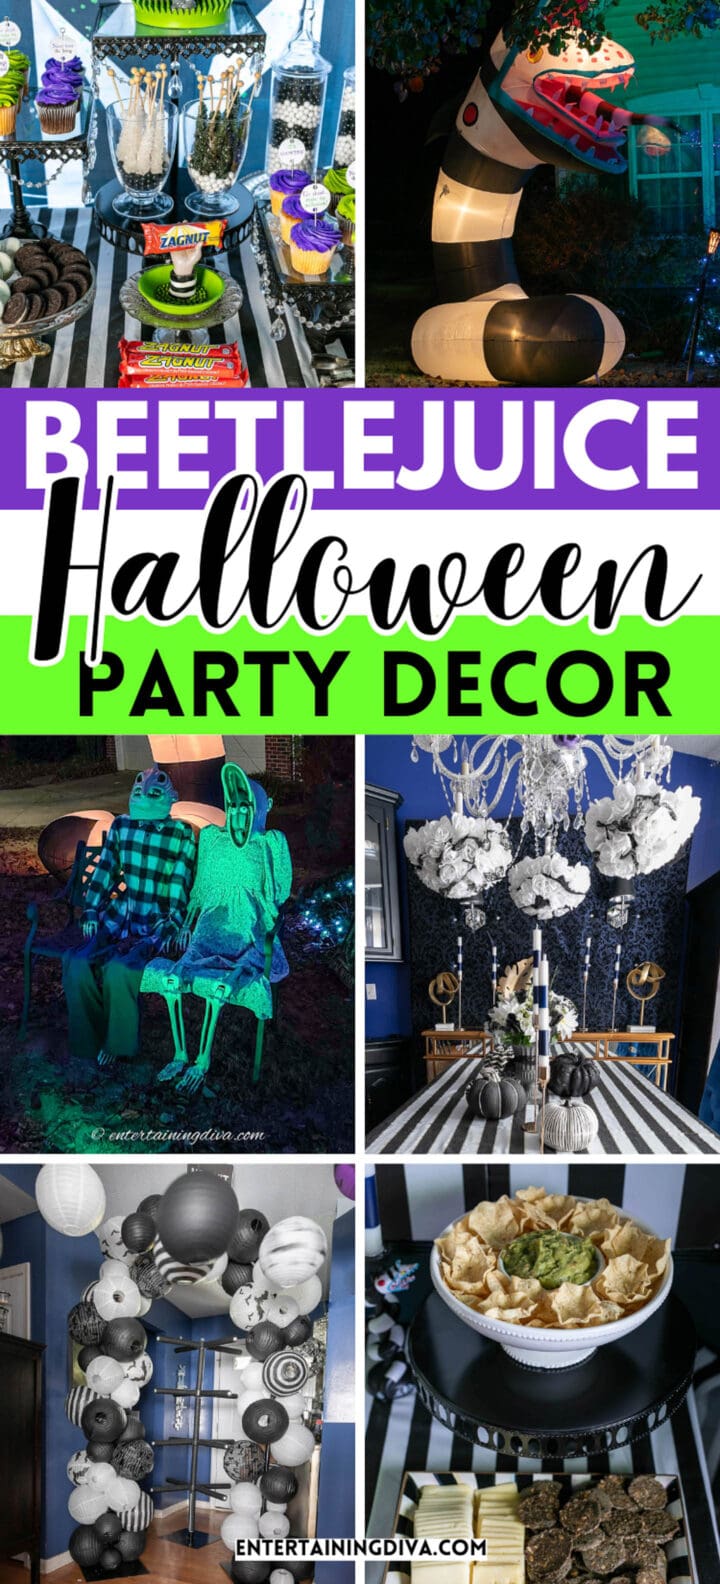 Beetlejuice-themed Halloween party decor.